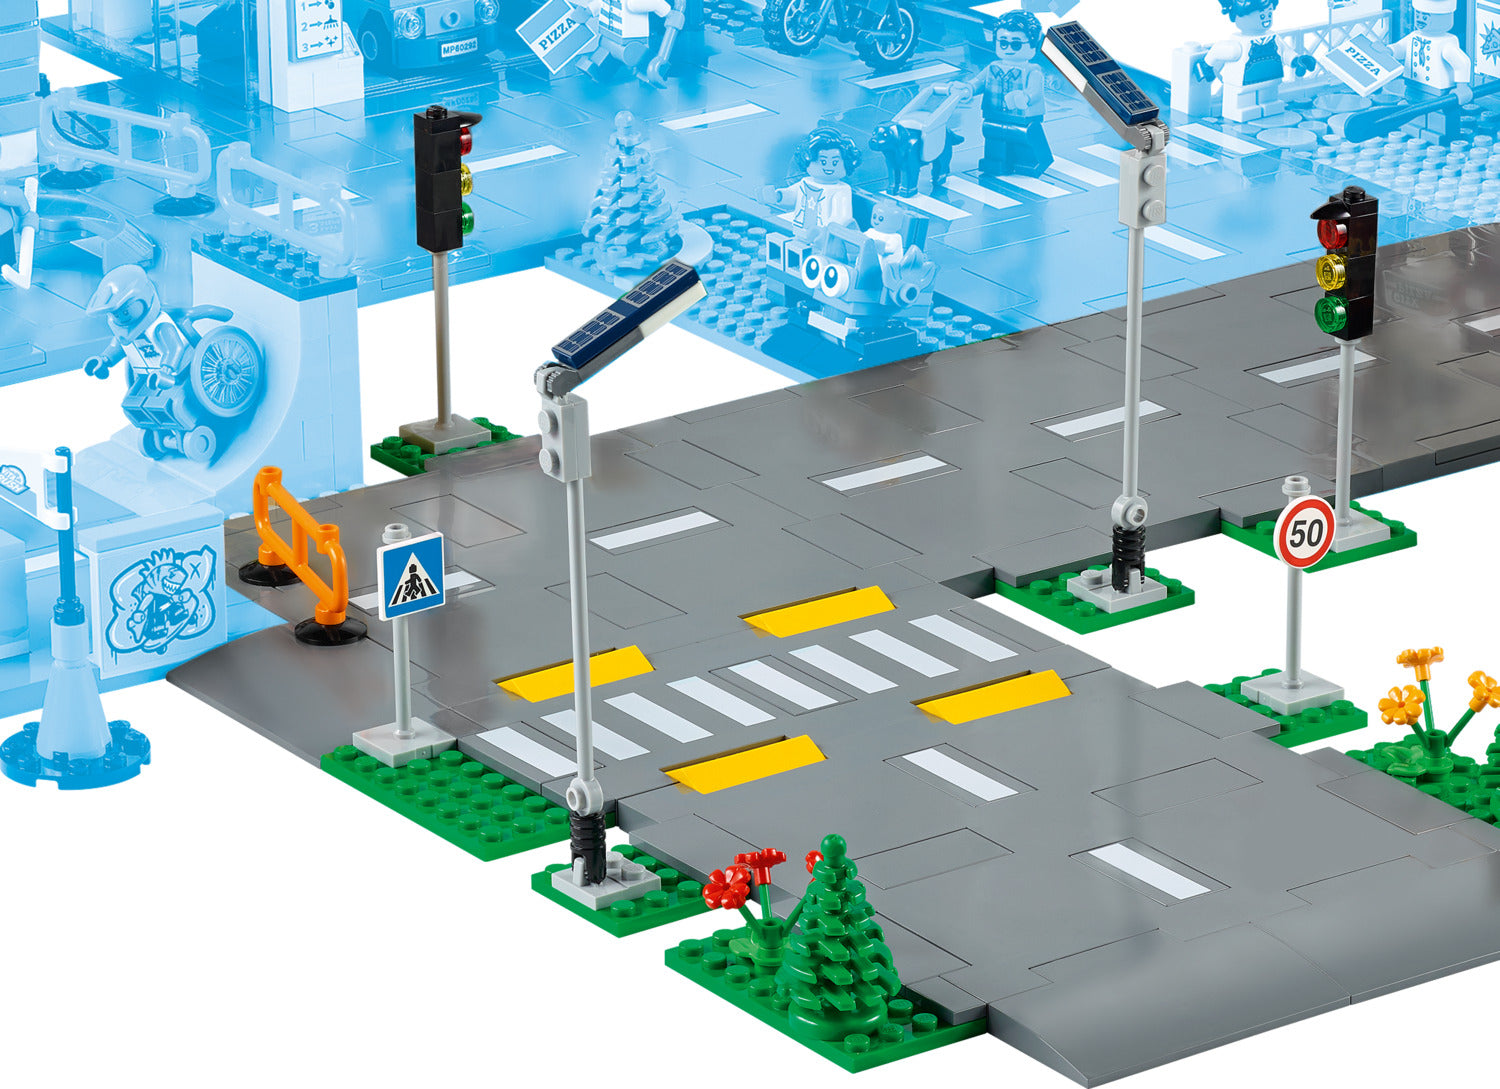 LEGO City: Road Plates